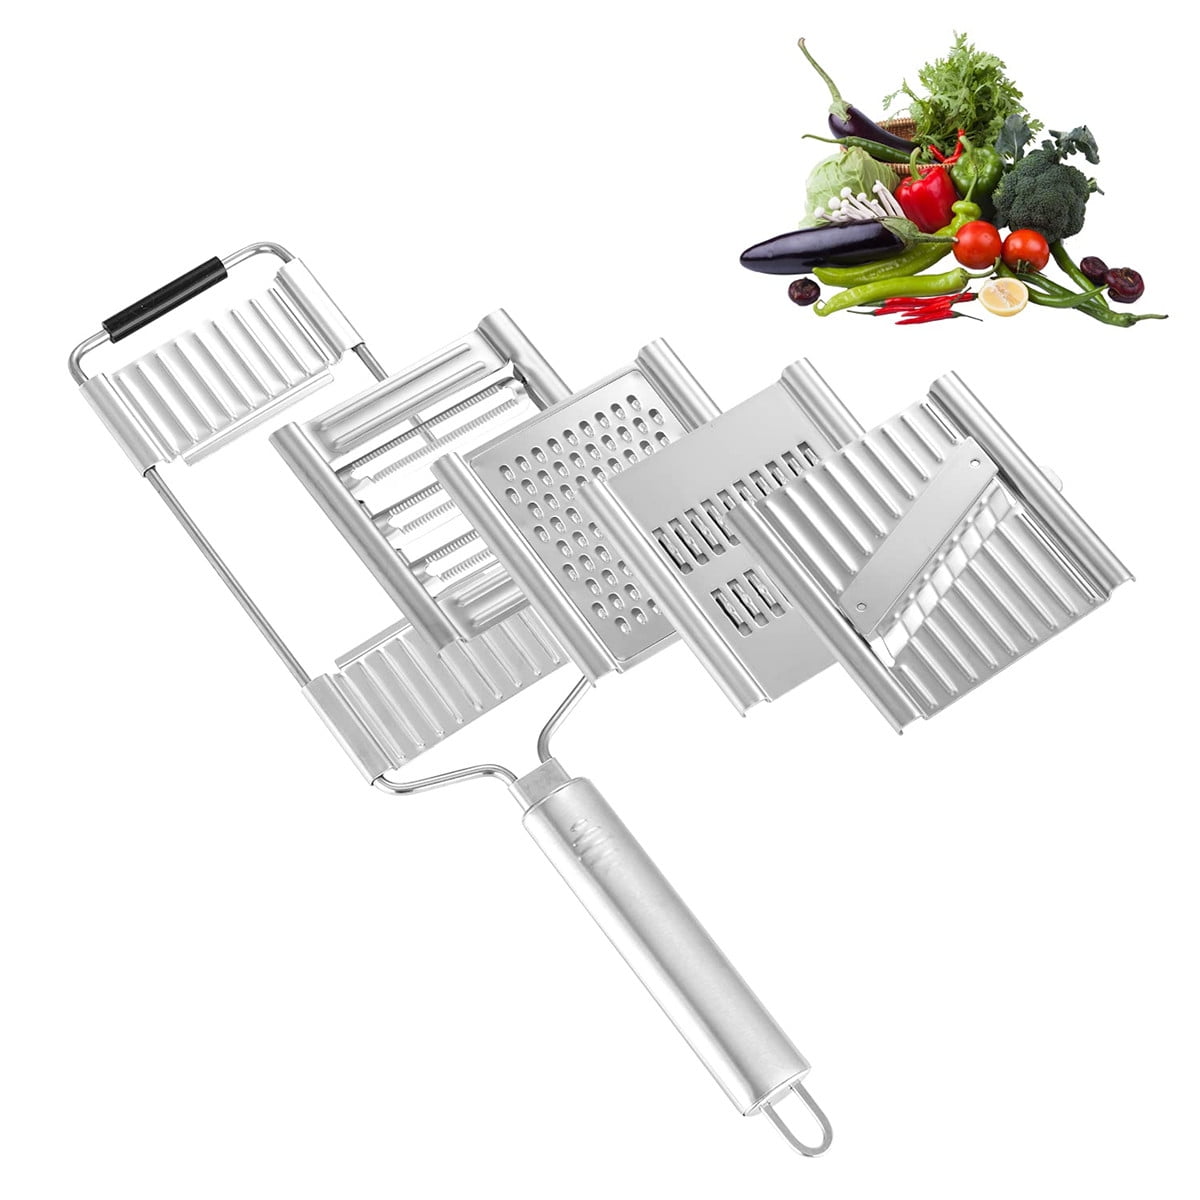 Suuker Vegetable Slicer Set,Stainless Steel Cheese Grater & Vegetable  Chopper with 4 adjustable Blades for Vegetables, Fruits,Hand-held Shredder